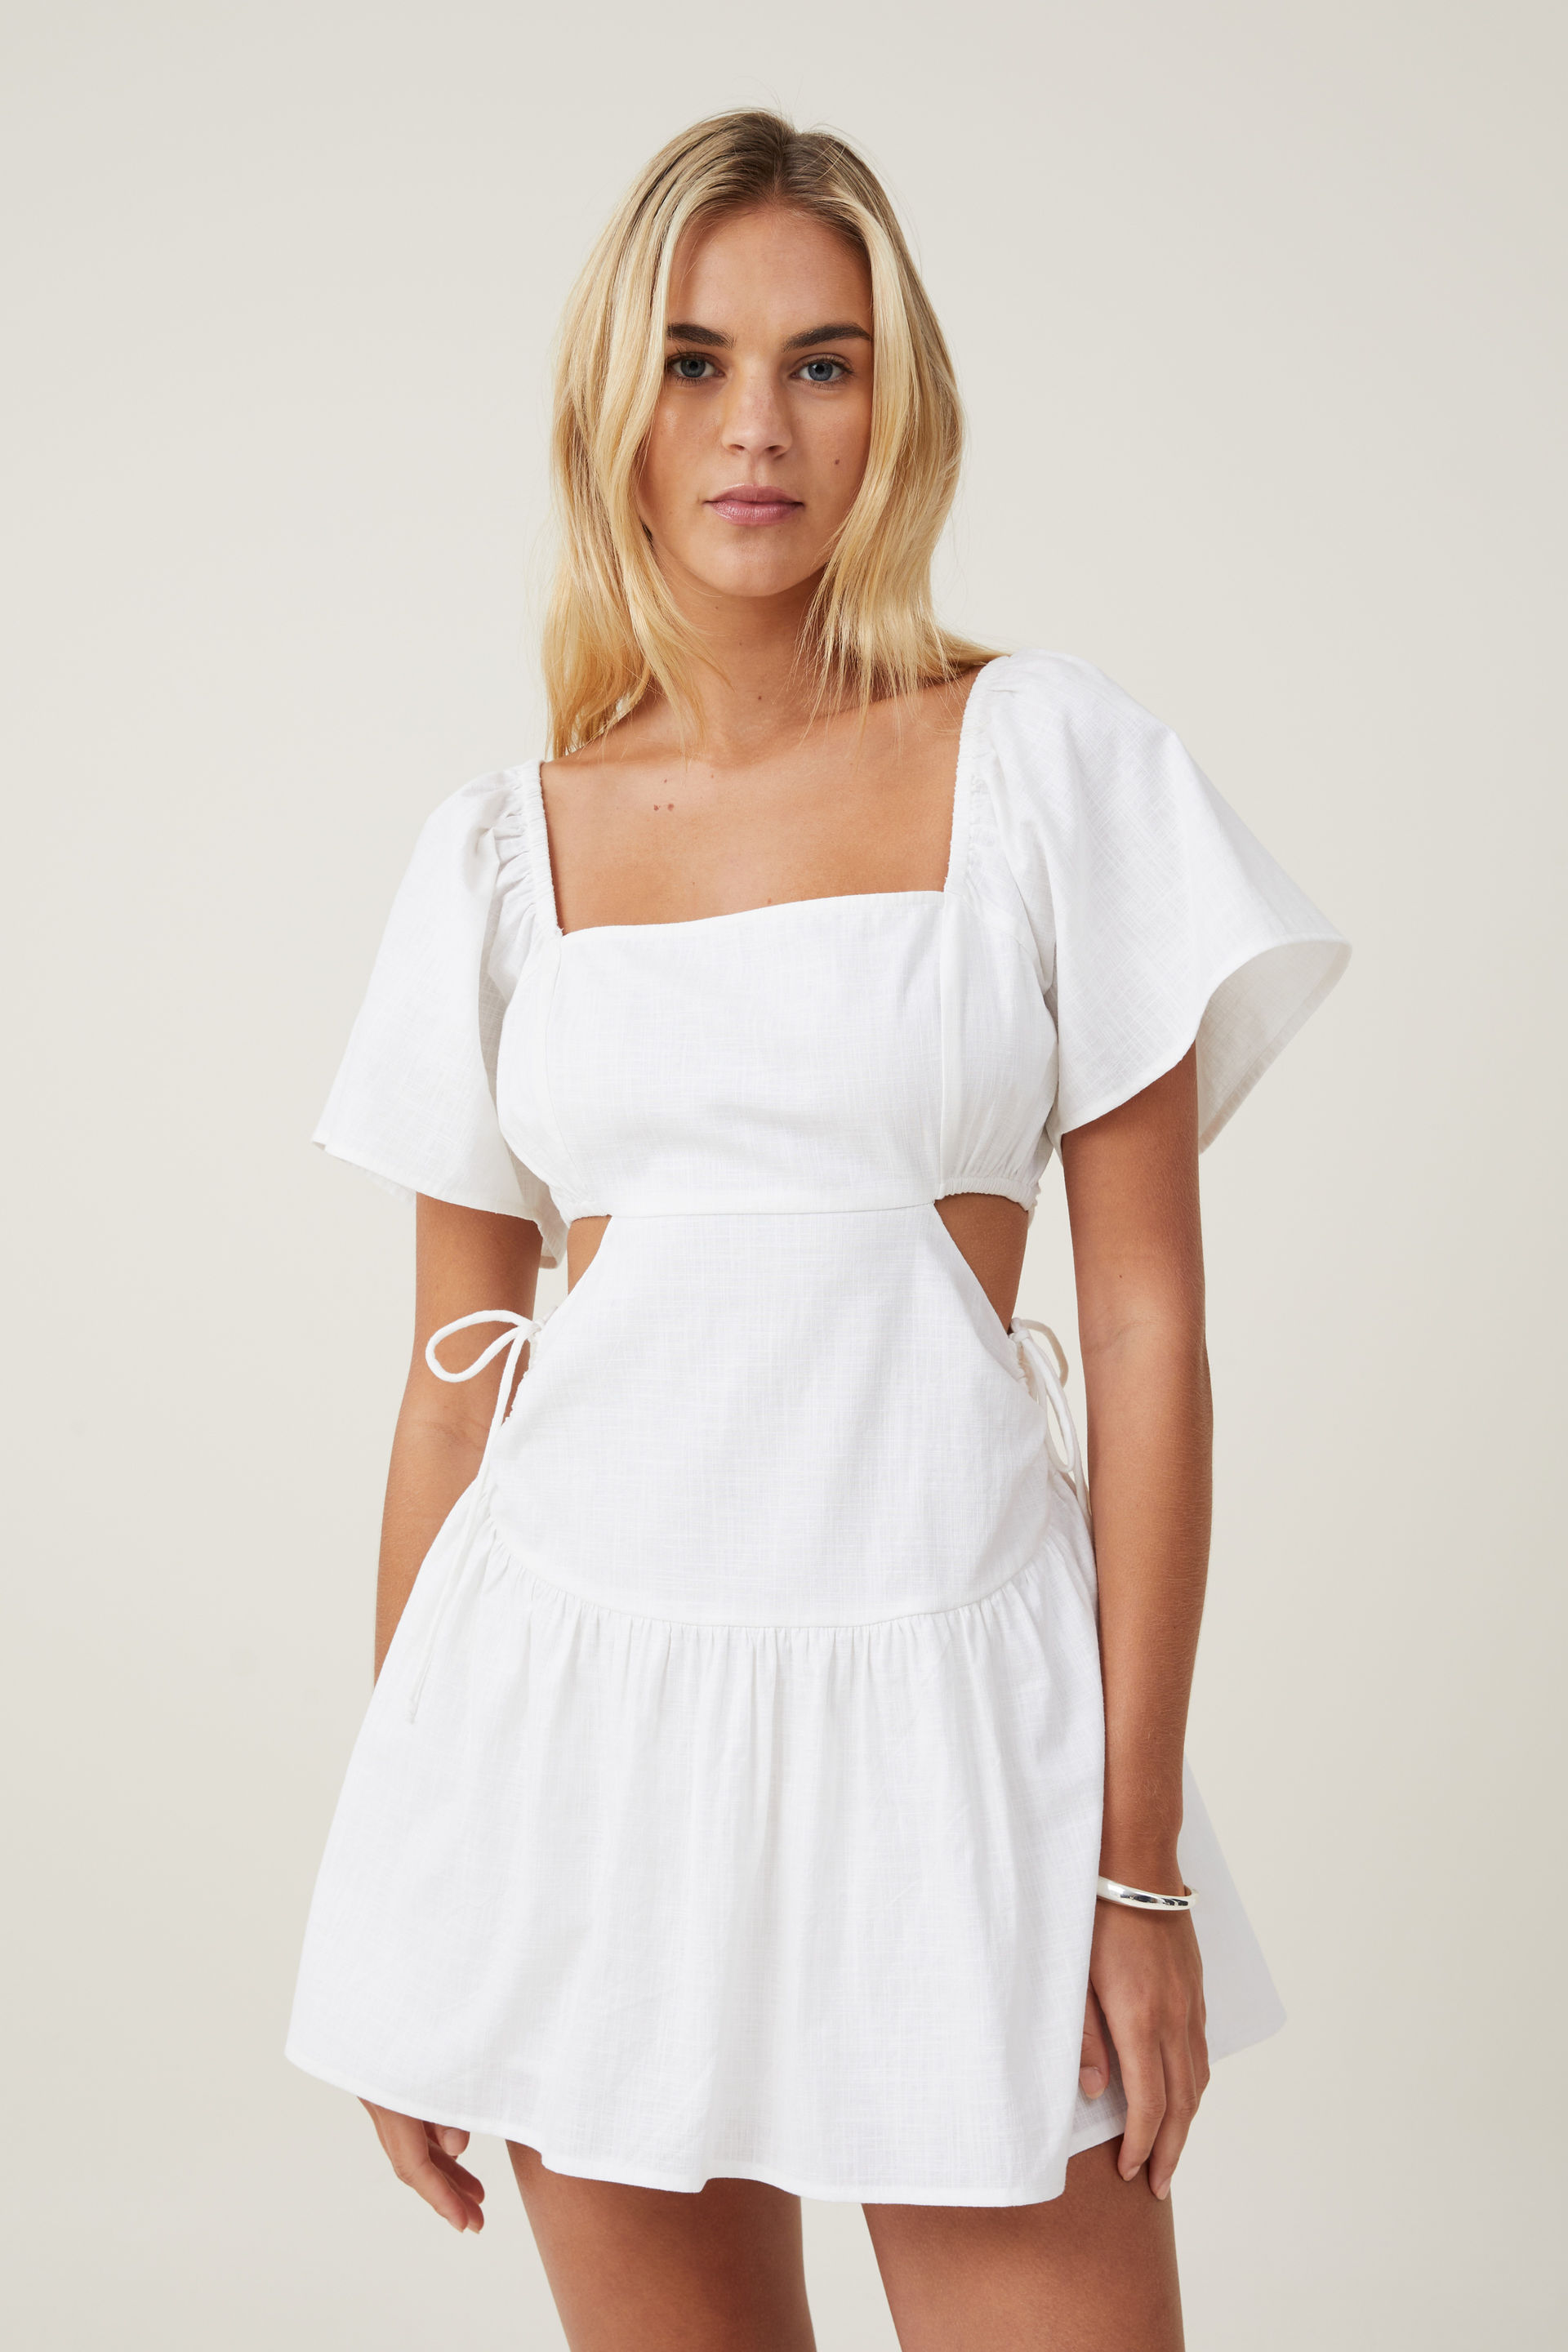 Cotton On Women - Presley Mini Dress - White